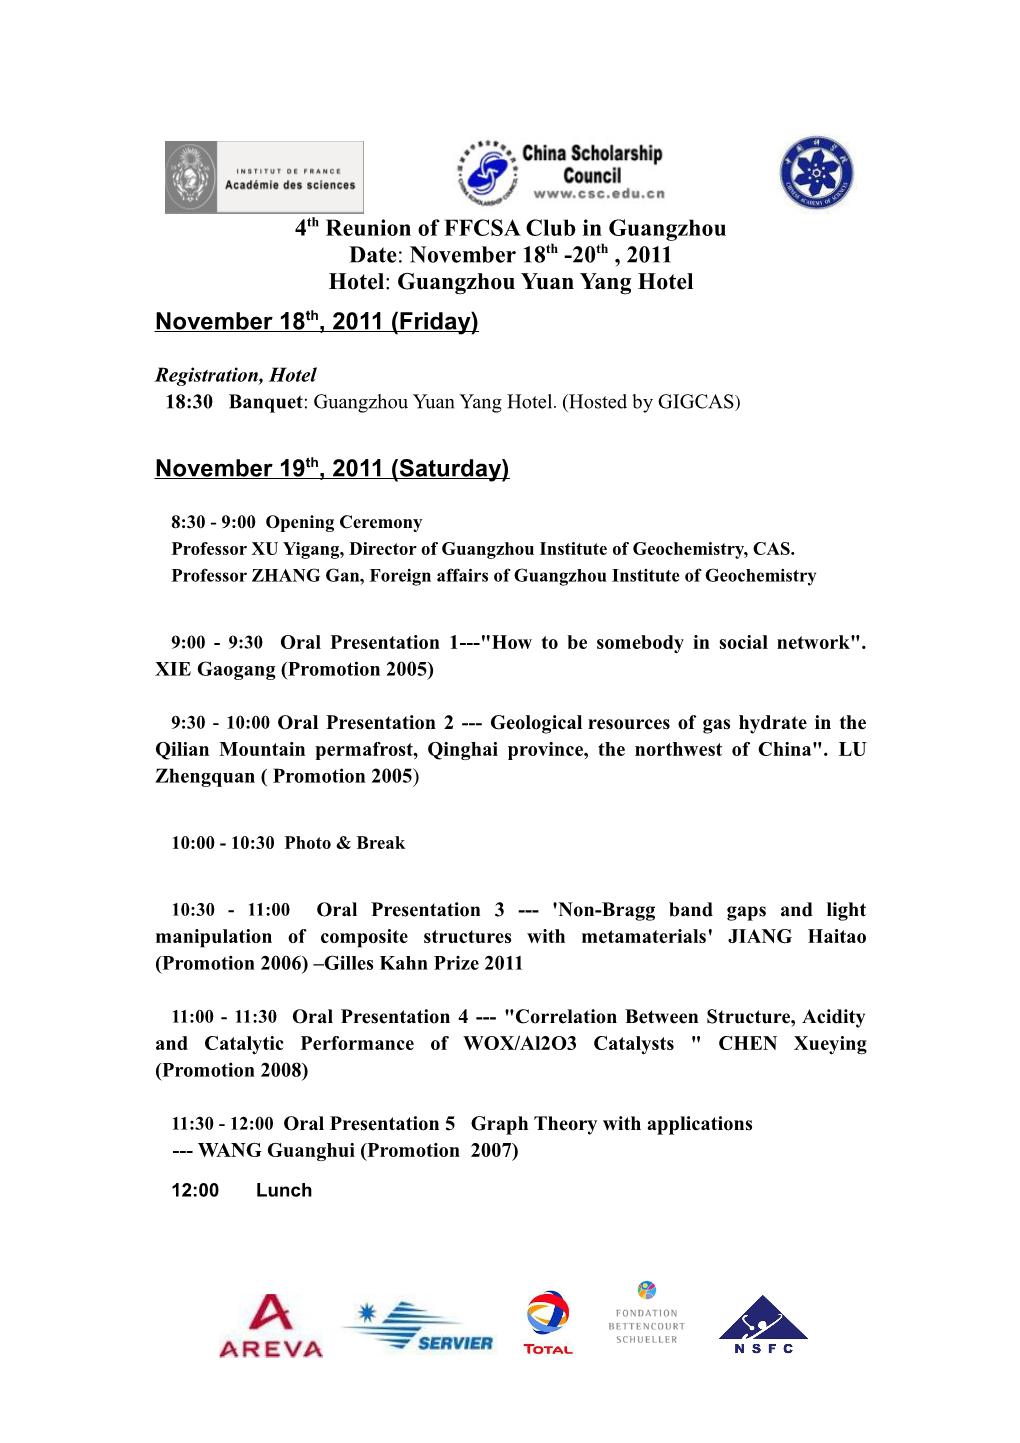 Plan for 2011 Reunion of FFCSA Club in Guangzhou